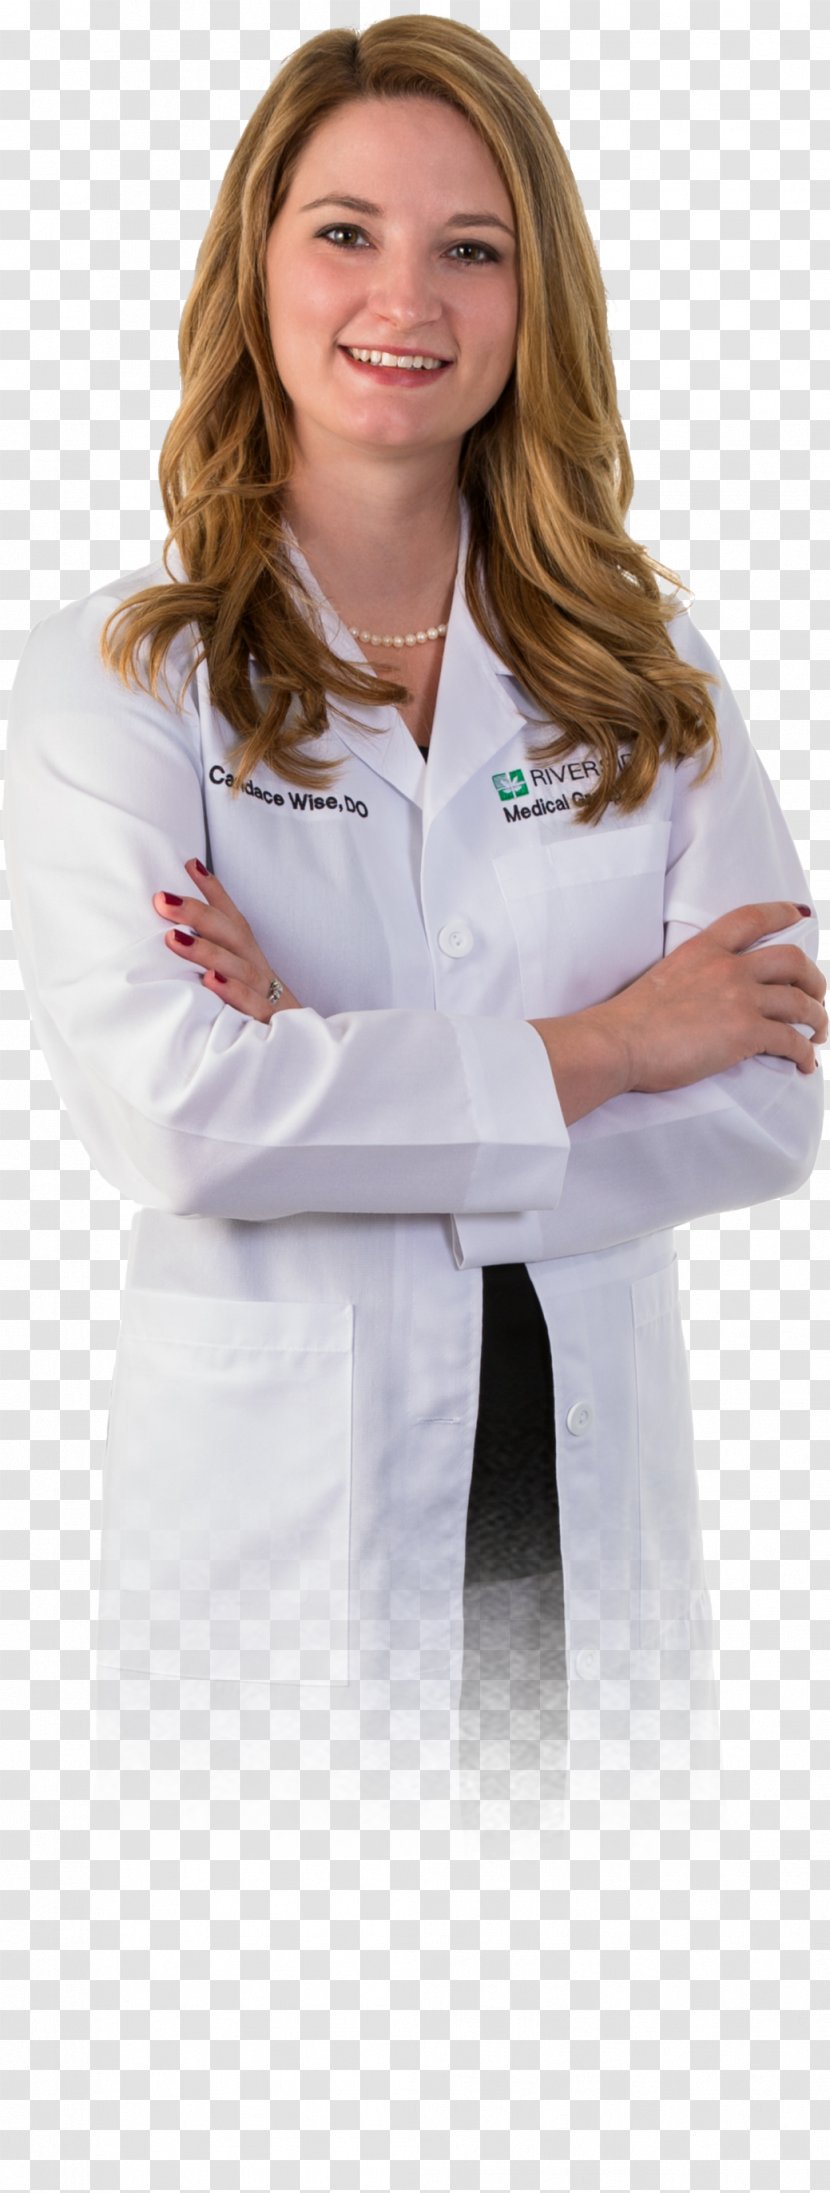 Lab Coats Physician Assistant Nurse Practitioner Stethoscope - Top - Dress Shirt Transparent PNG